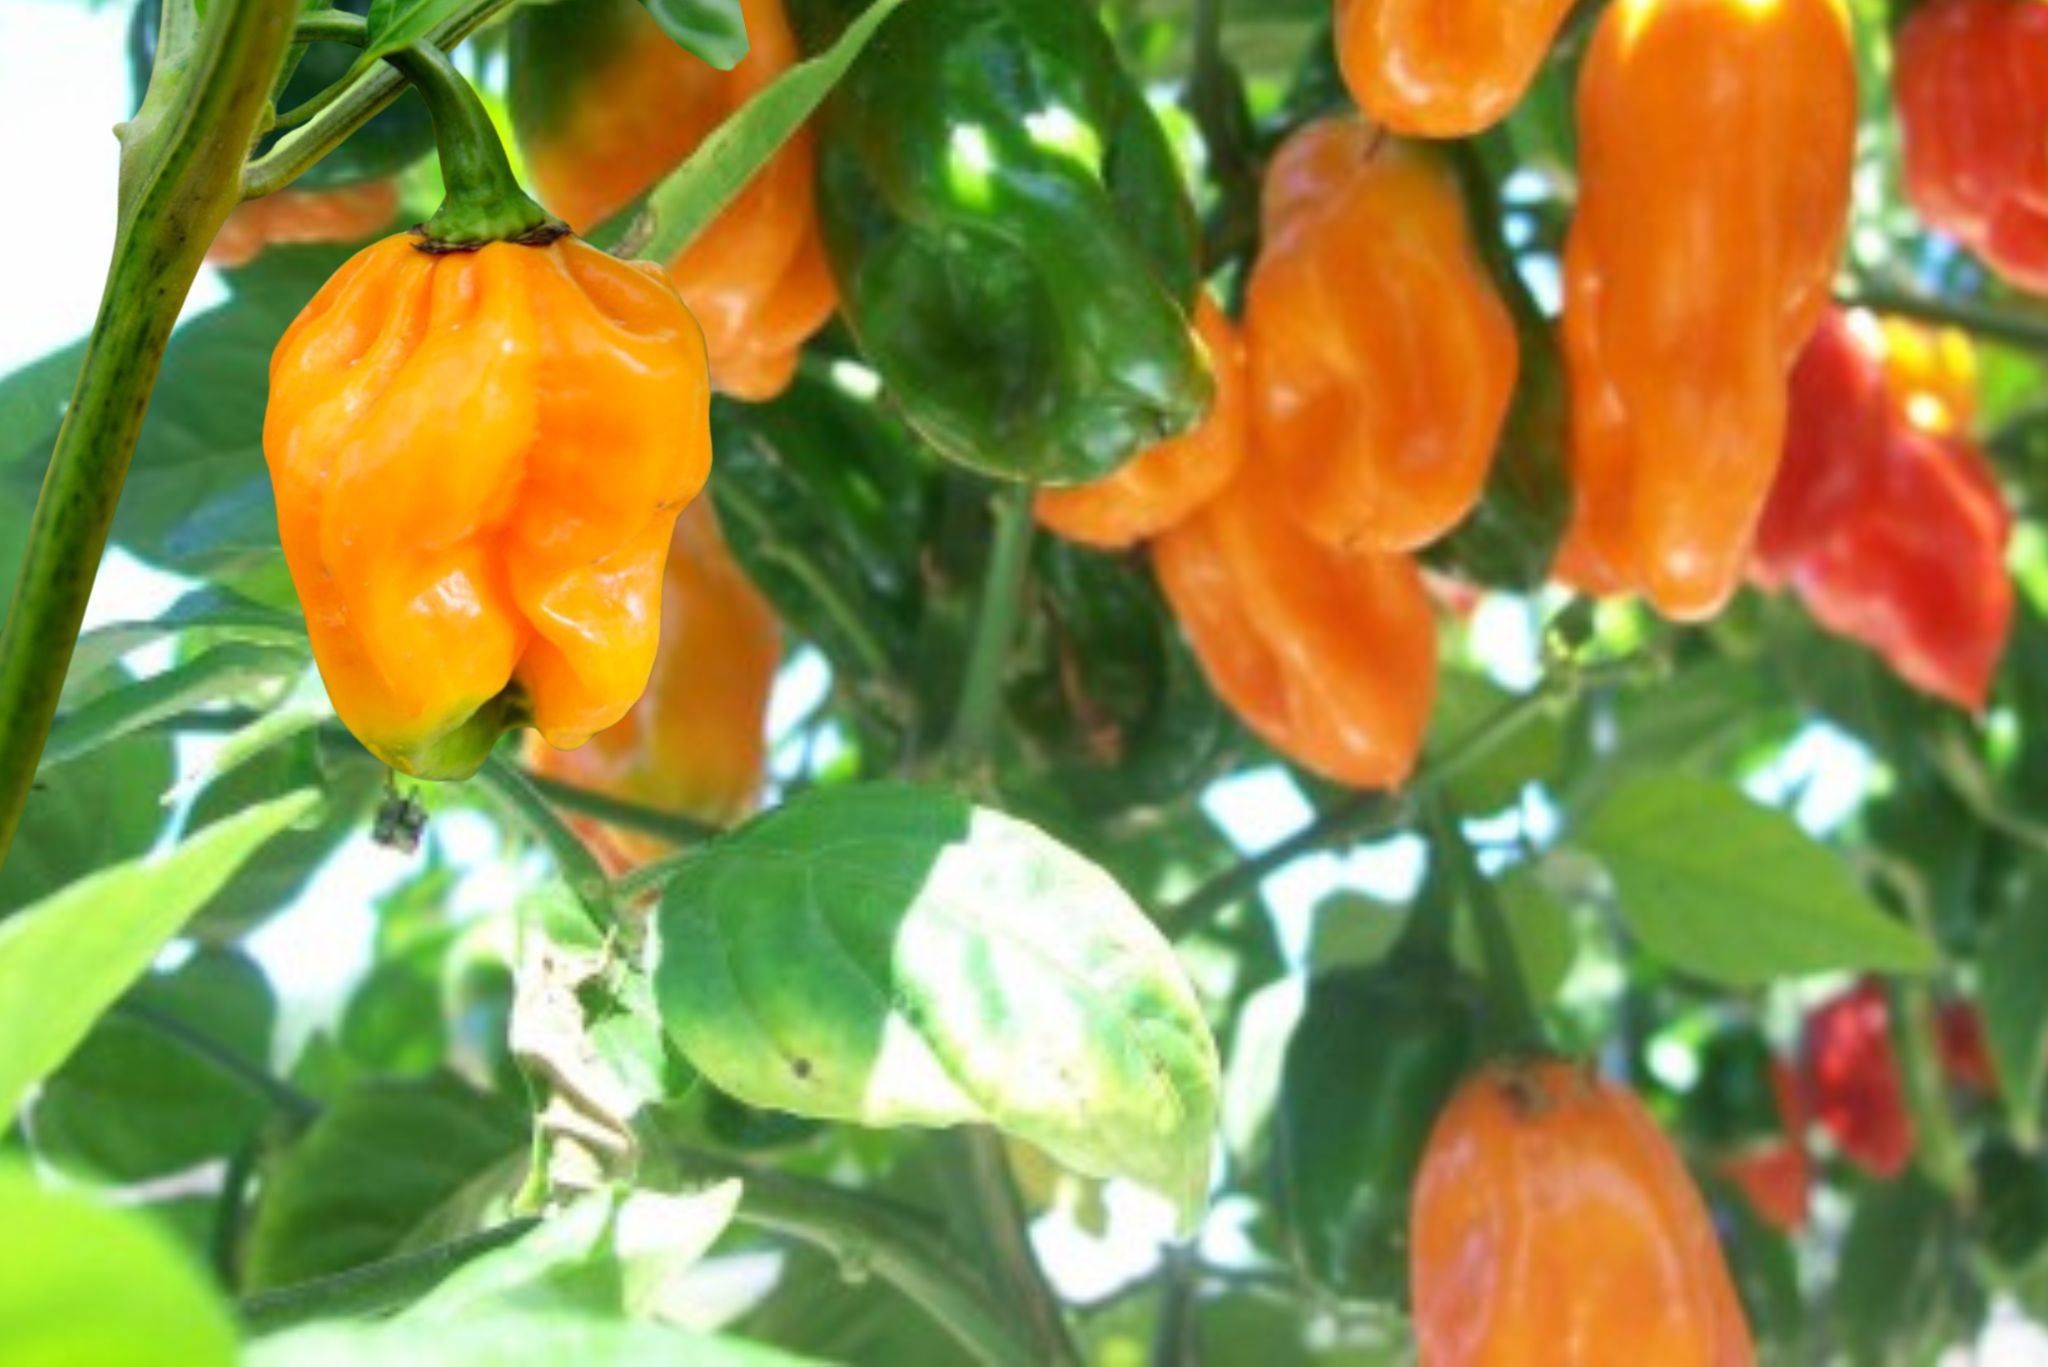 Orange Habanero Chile pepper on the plant